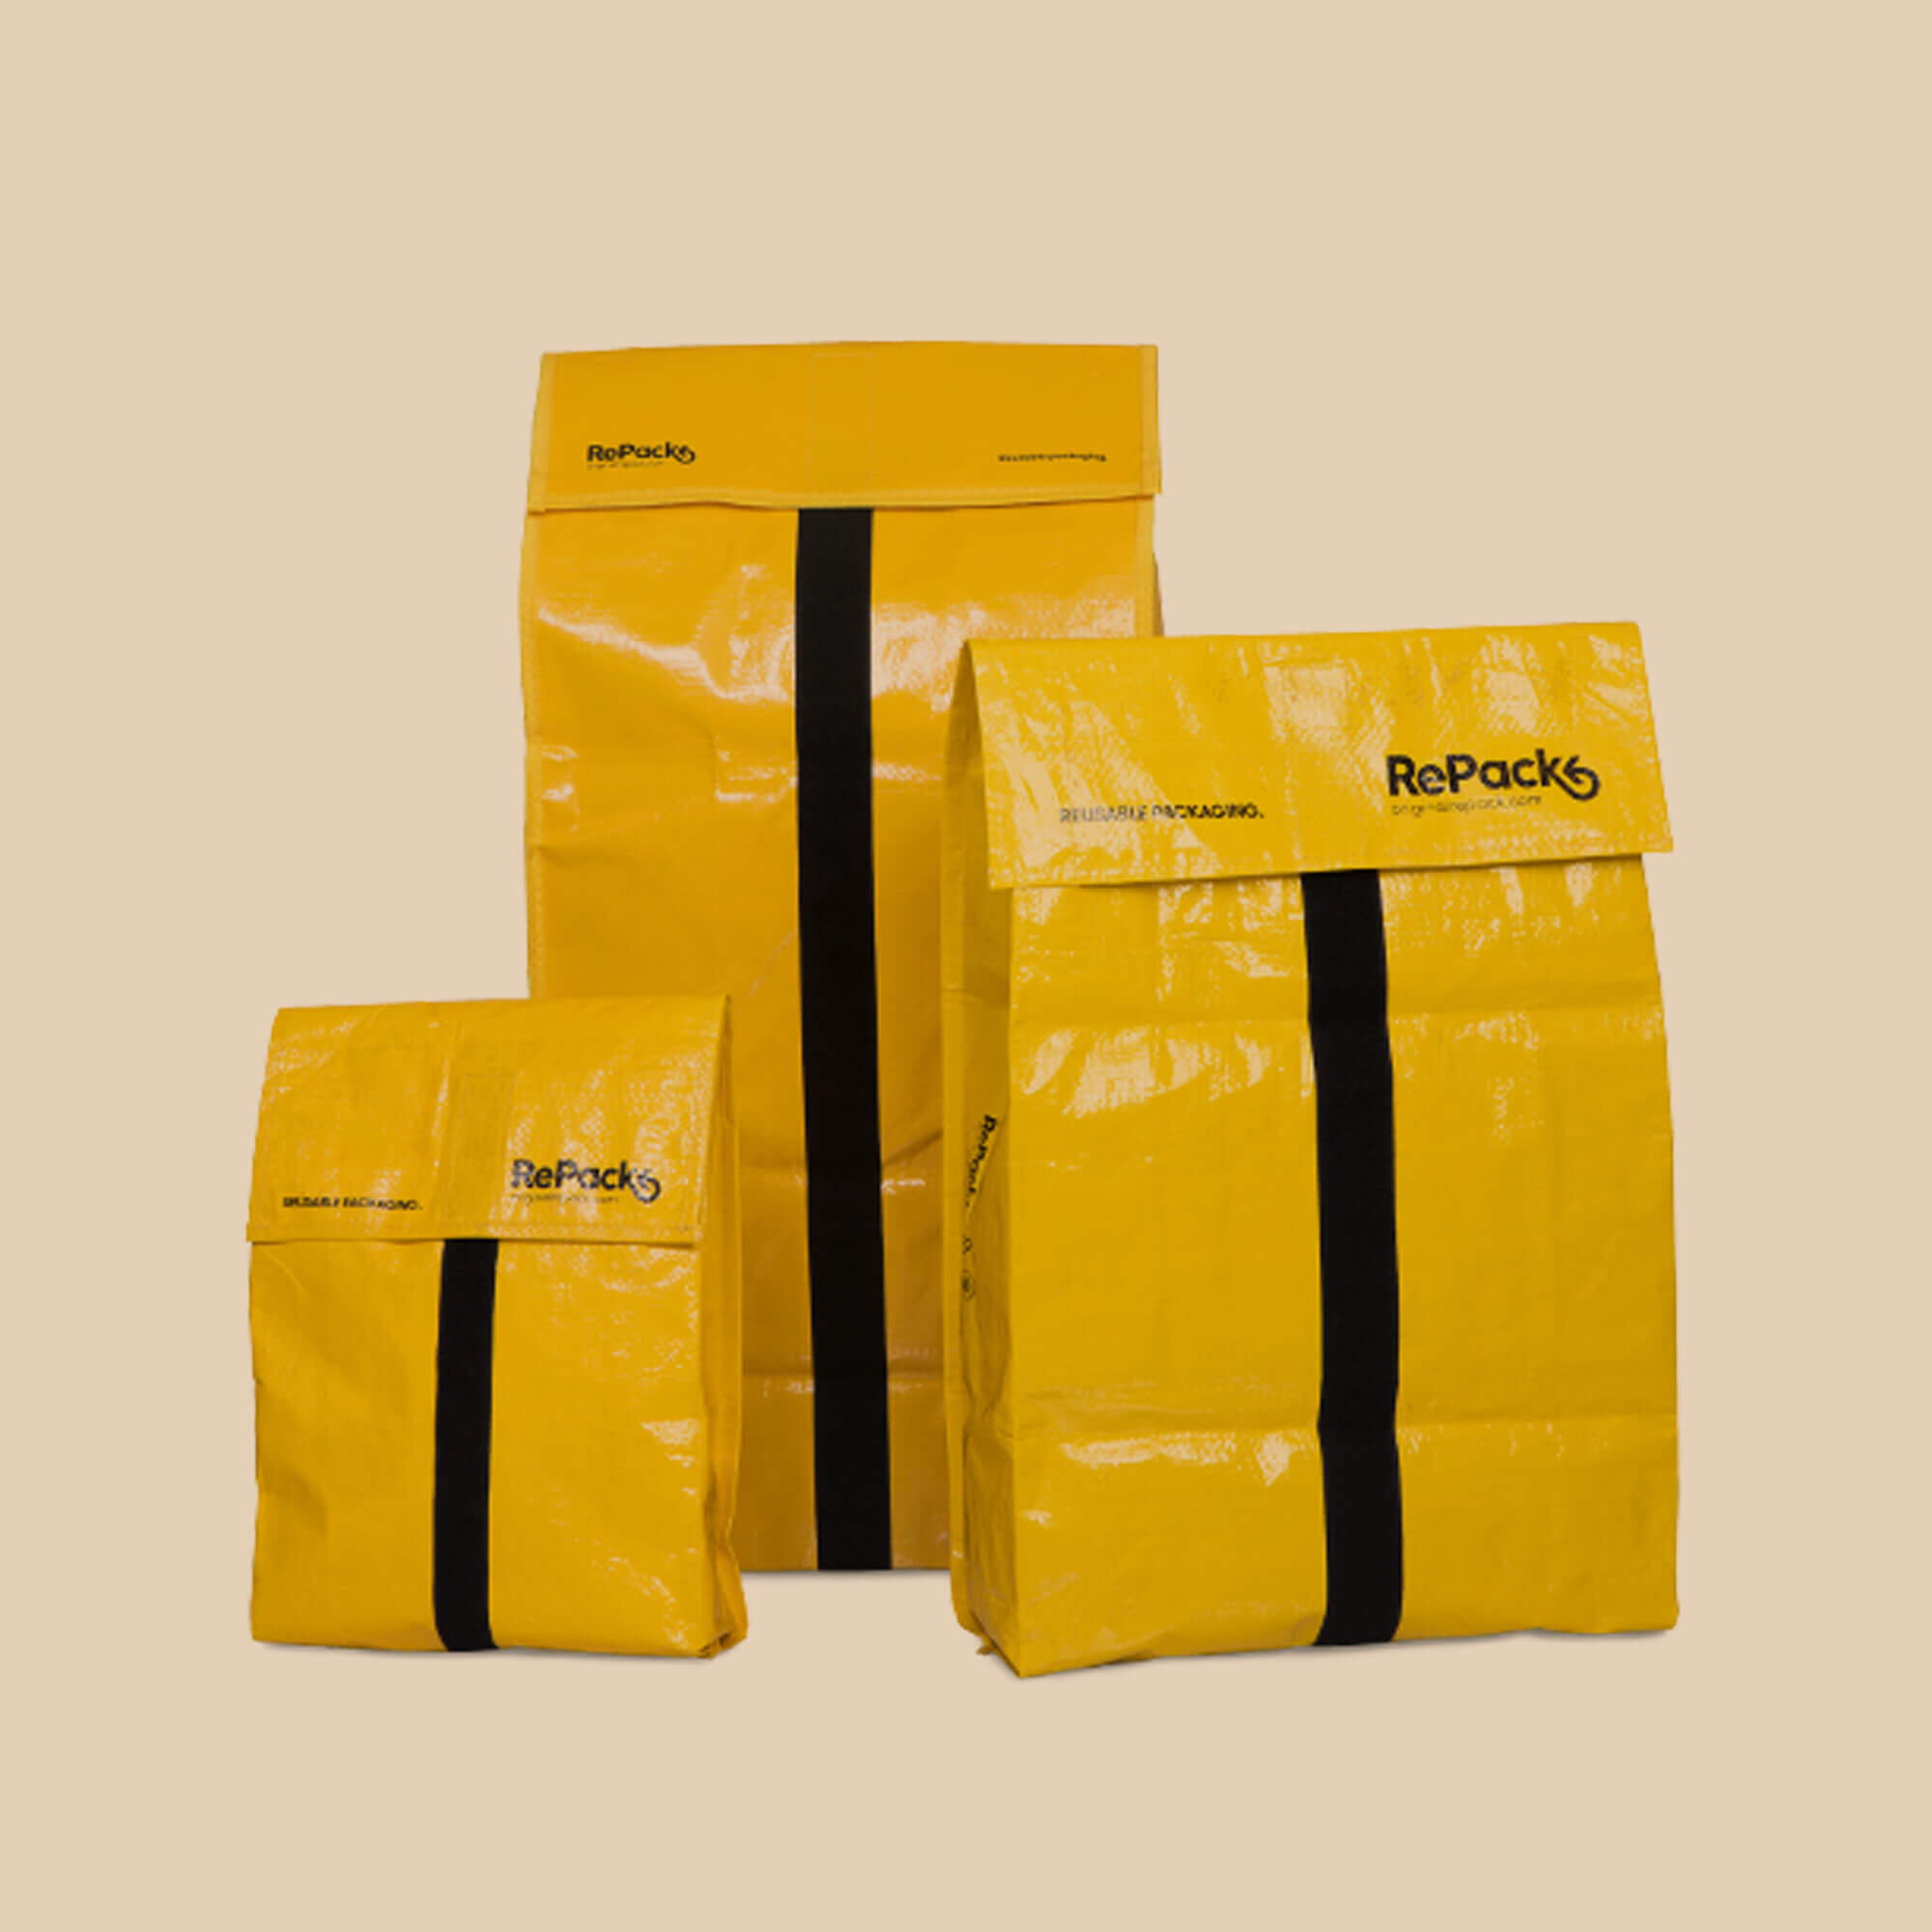 RePack Offers Reusable E-Commerce Packaging | Dieline - Design ...